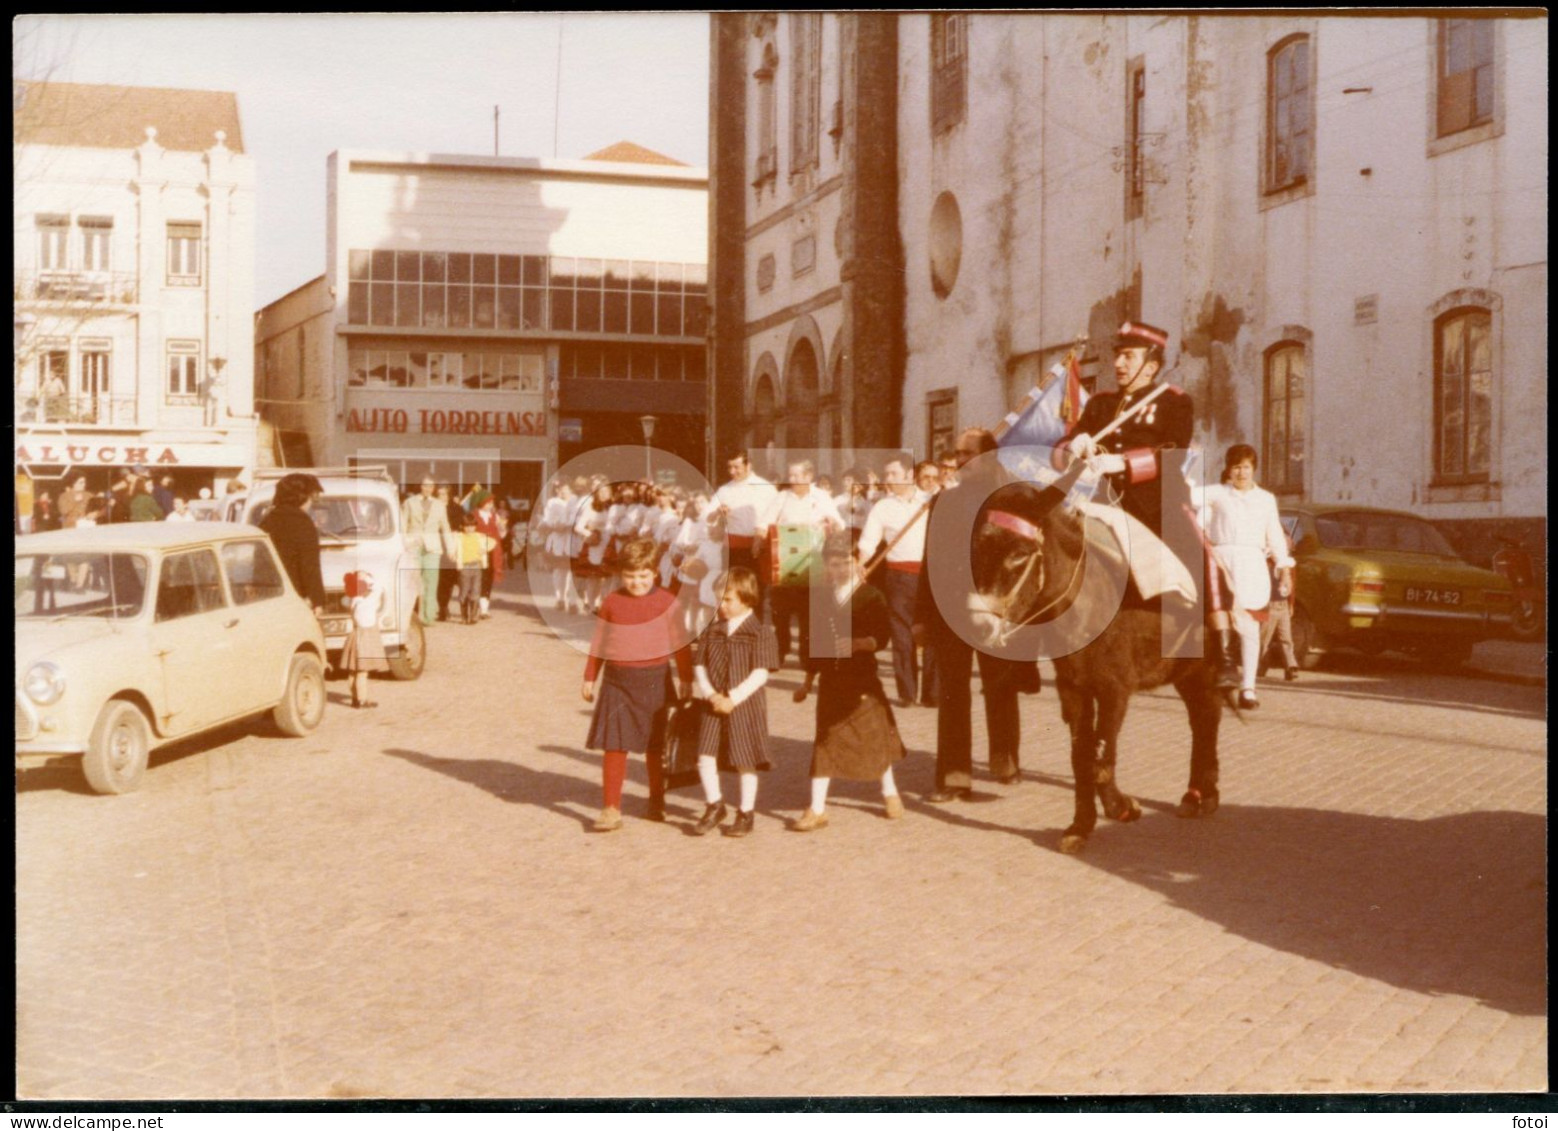 5 PHOTOS SET 1979 REAL AMATEUR FOTO PHOTO CARNIVAL CARNAVAL TORRES VEDRAS PORTUGAL AT344 - Afrique